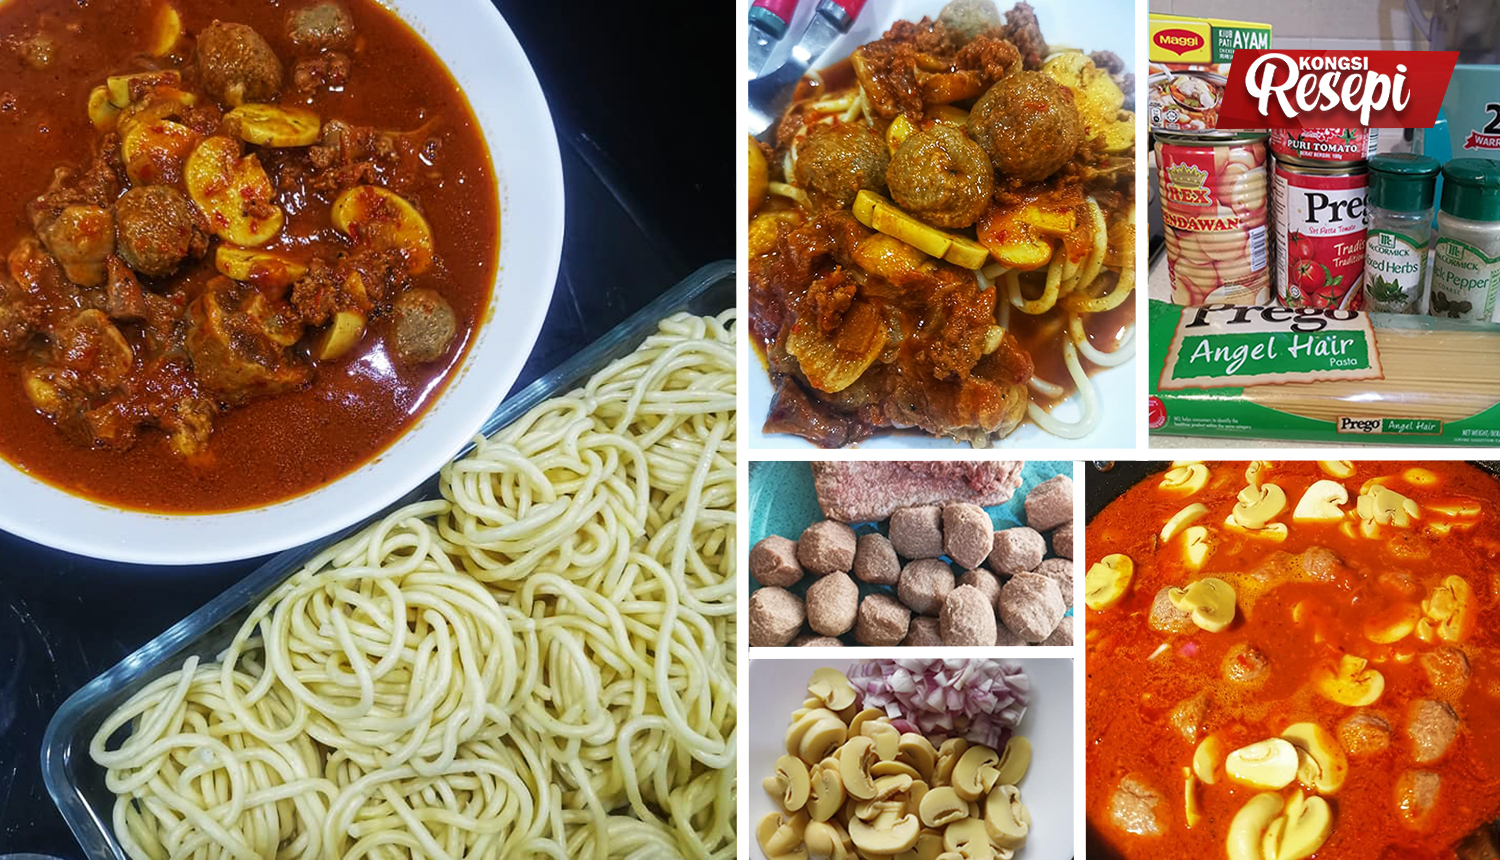 Resepi Spaghetti Bolognese Versi Melayu Siap Ada Tulang. Yang Tak Suka